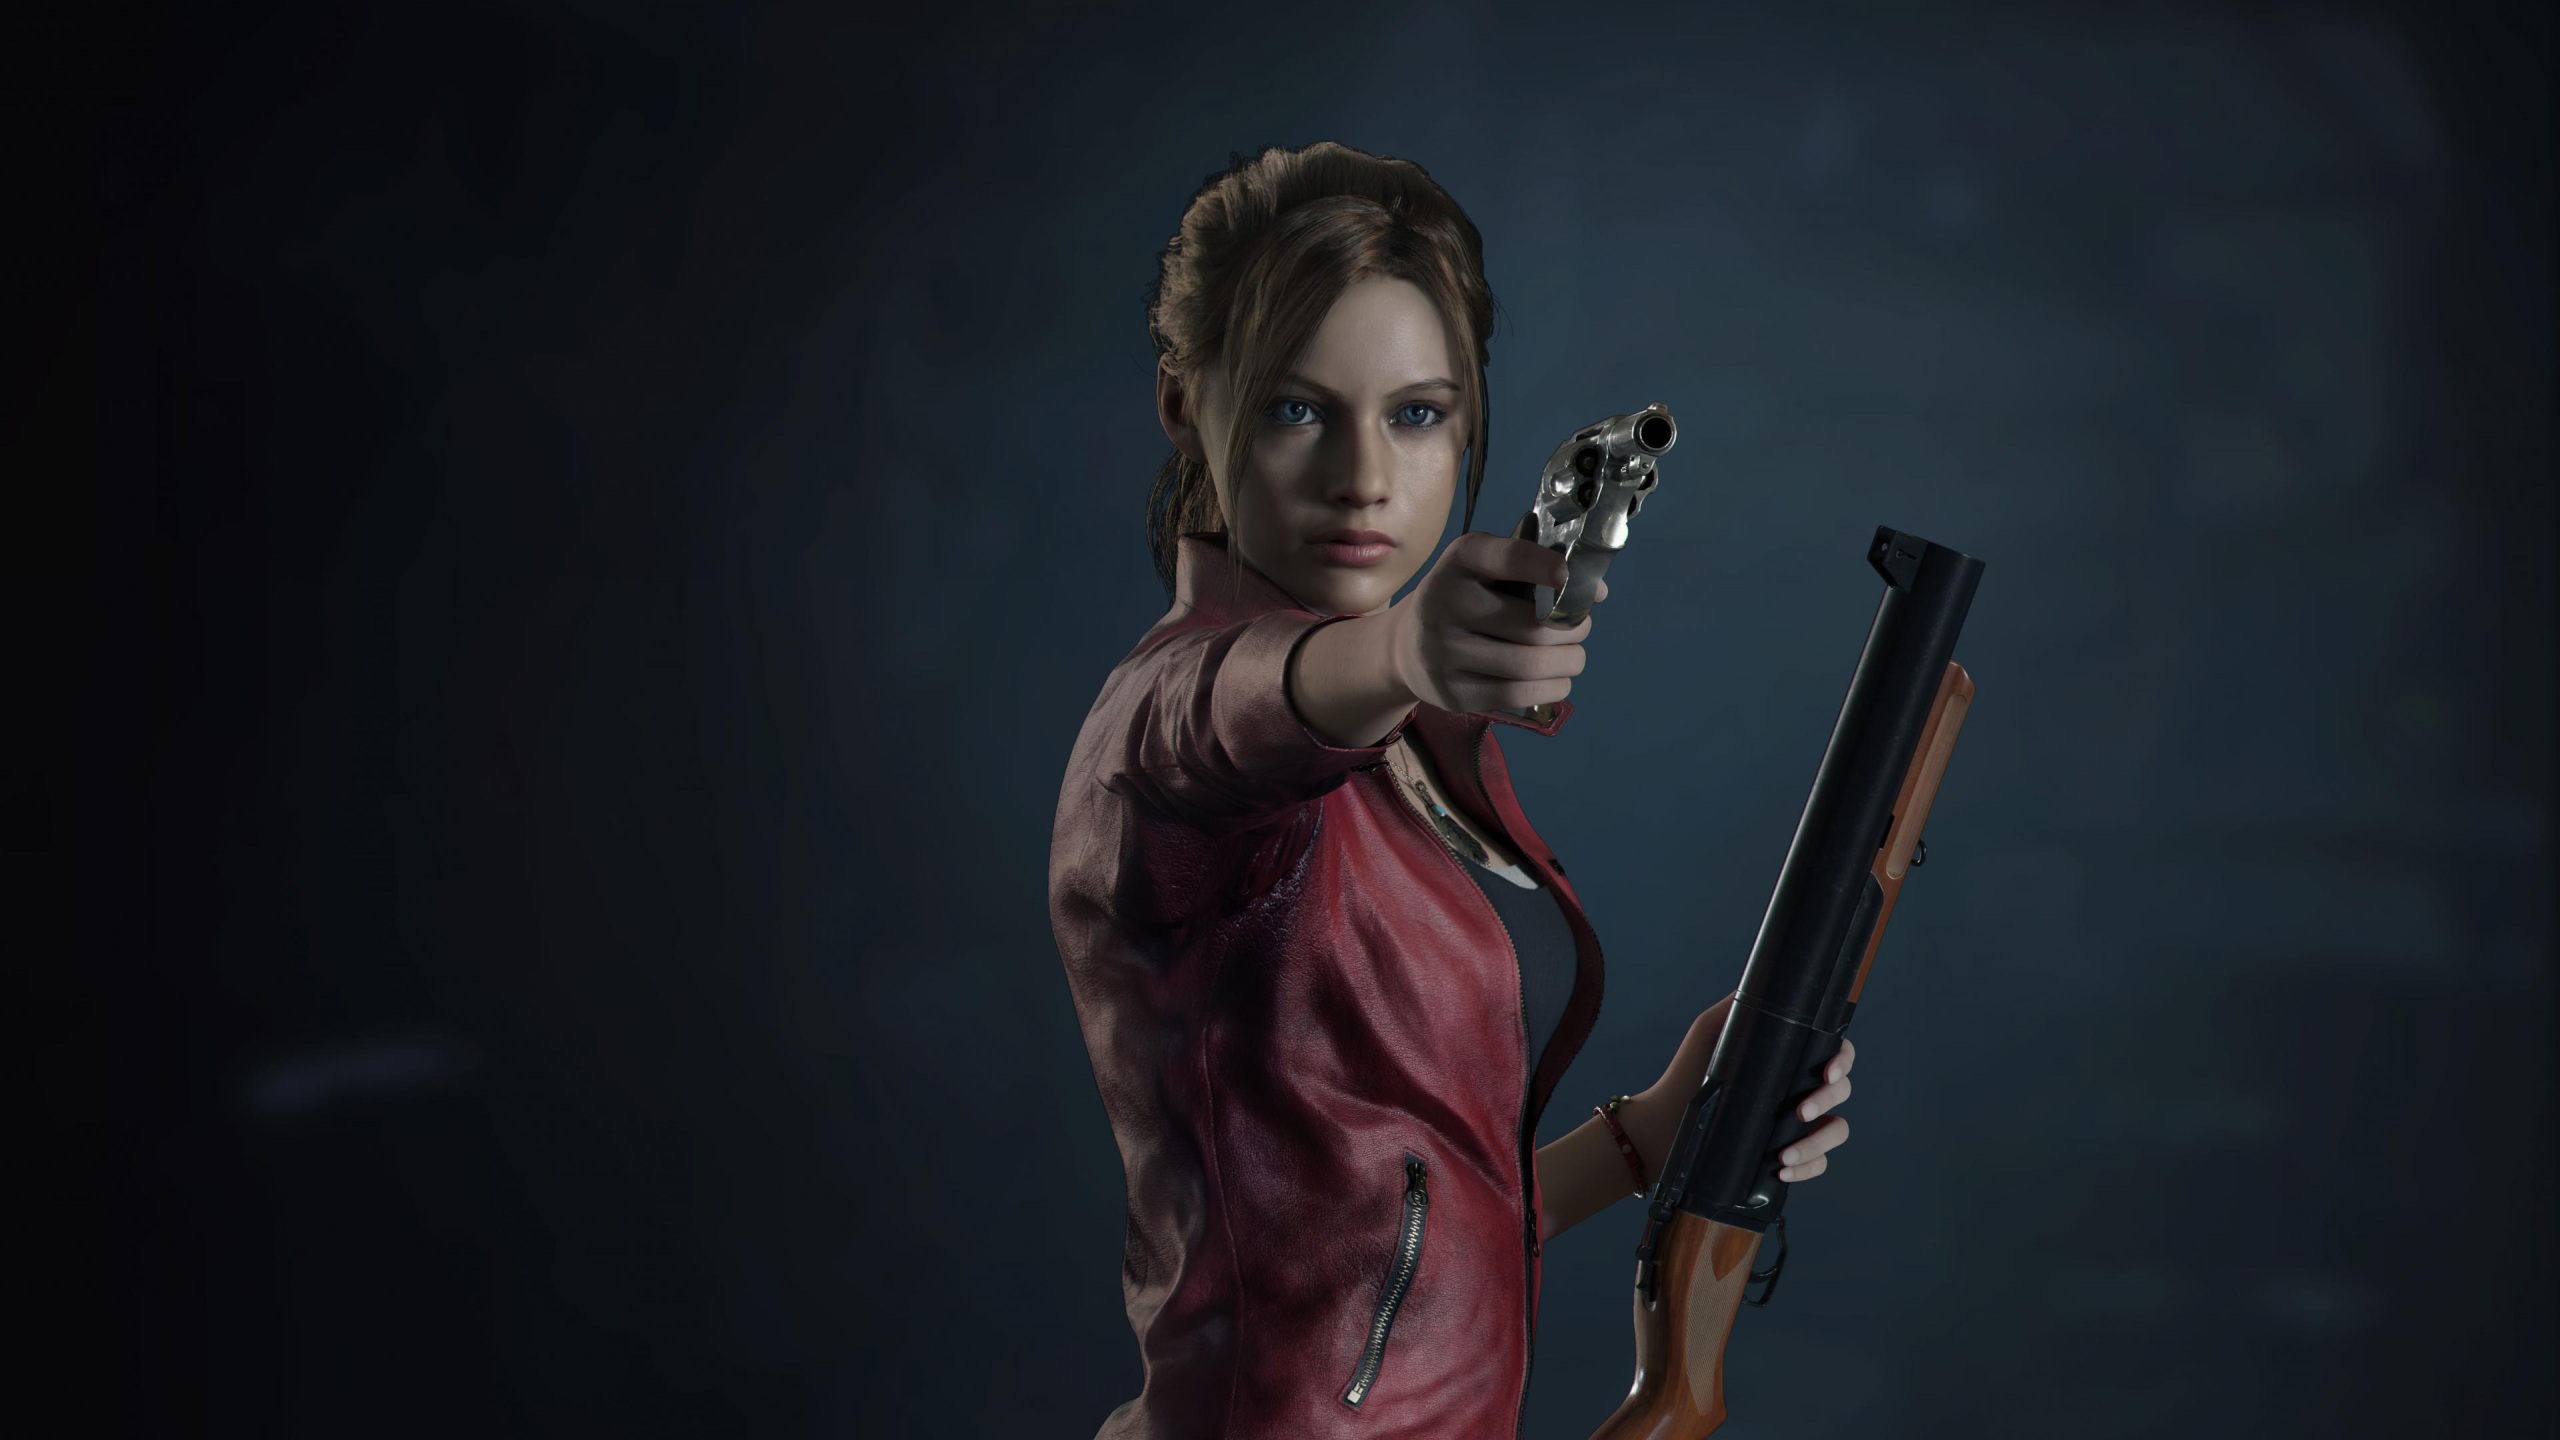 Wallpaper 4k Resident Evil 2 Claire Redfield 4k 2019 Games